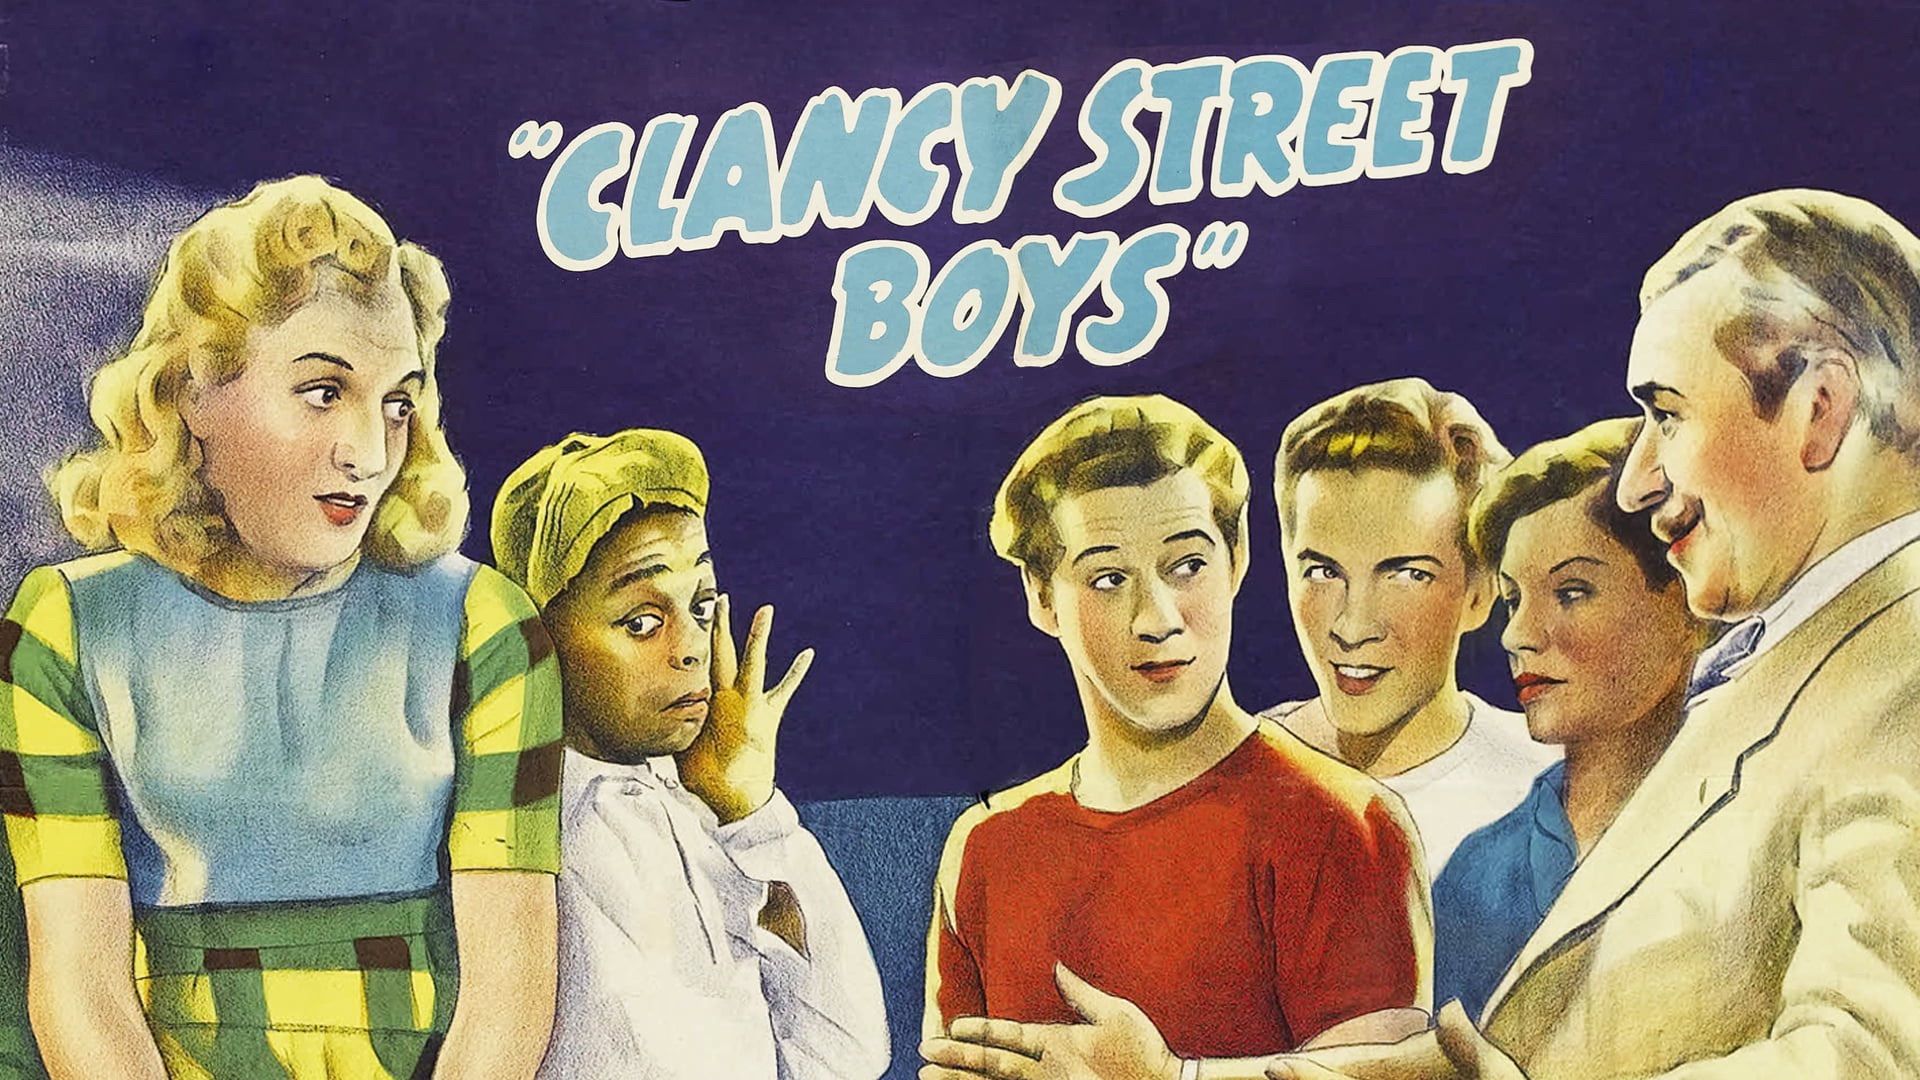 Clancy Street Boys Backdrop